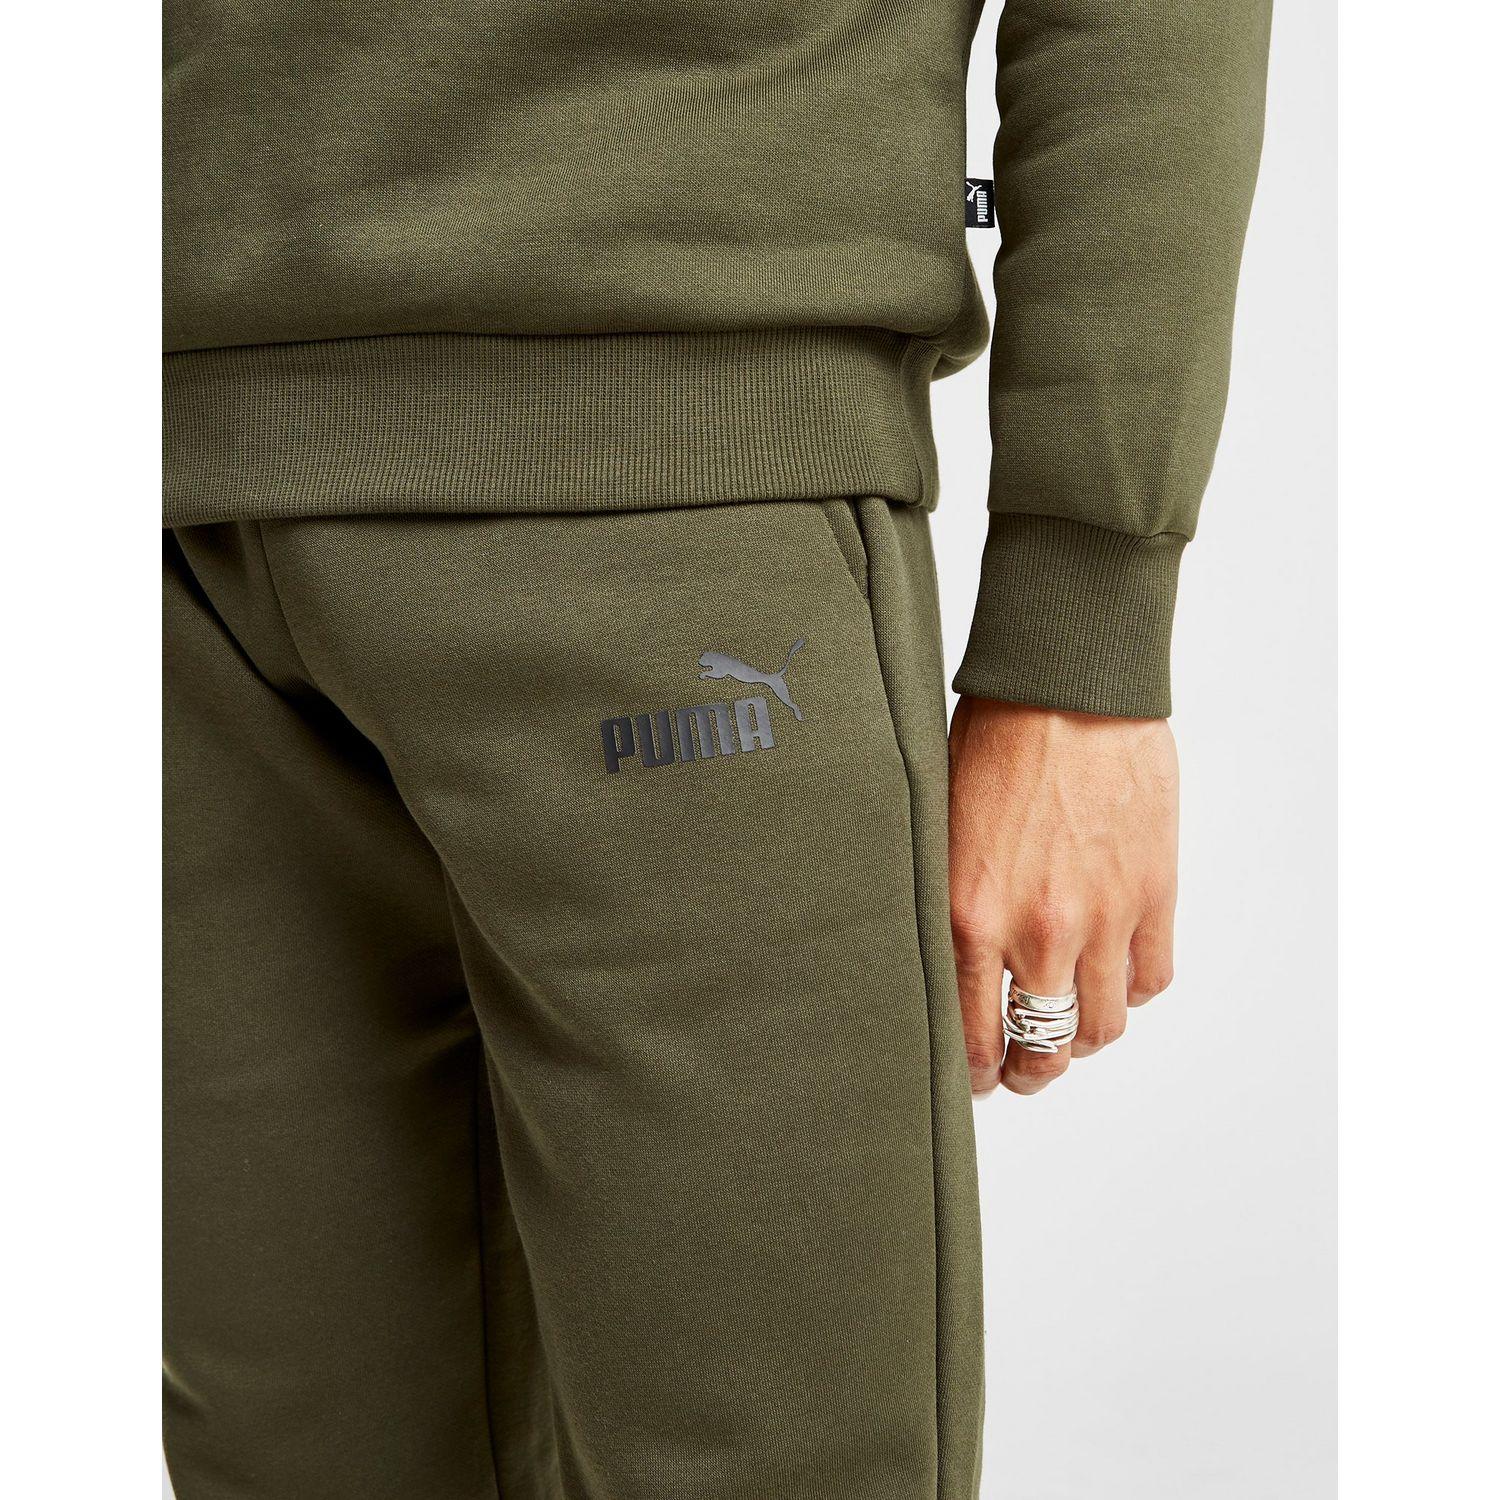 puma core logo pants green